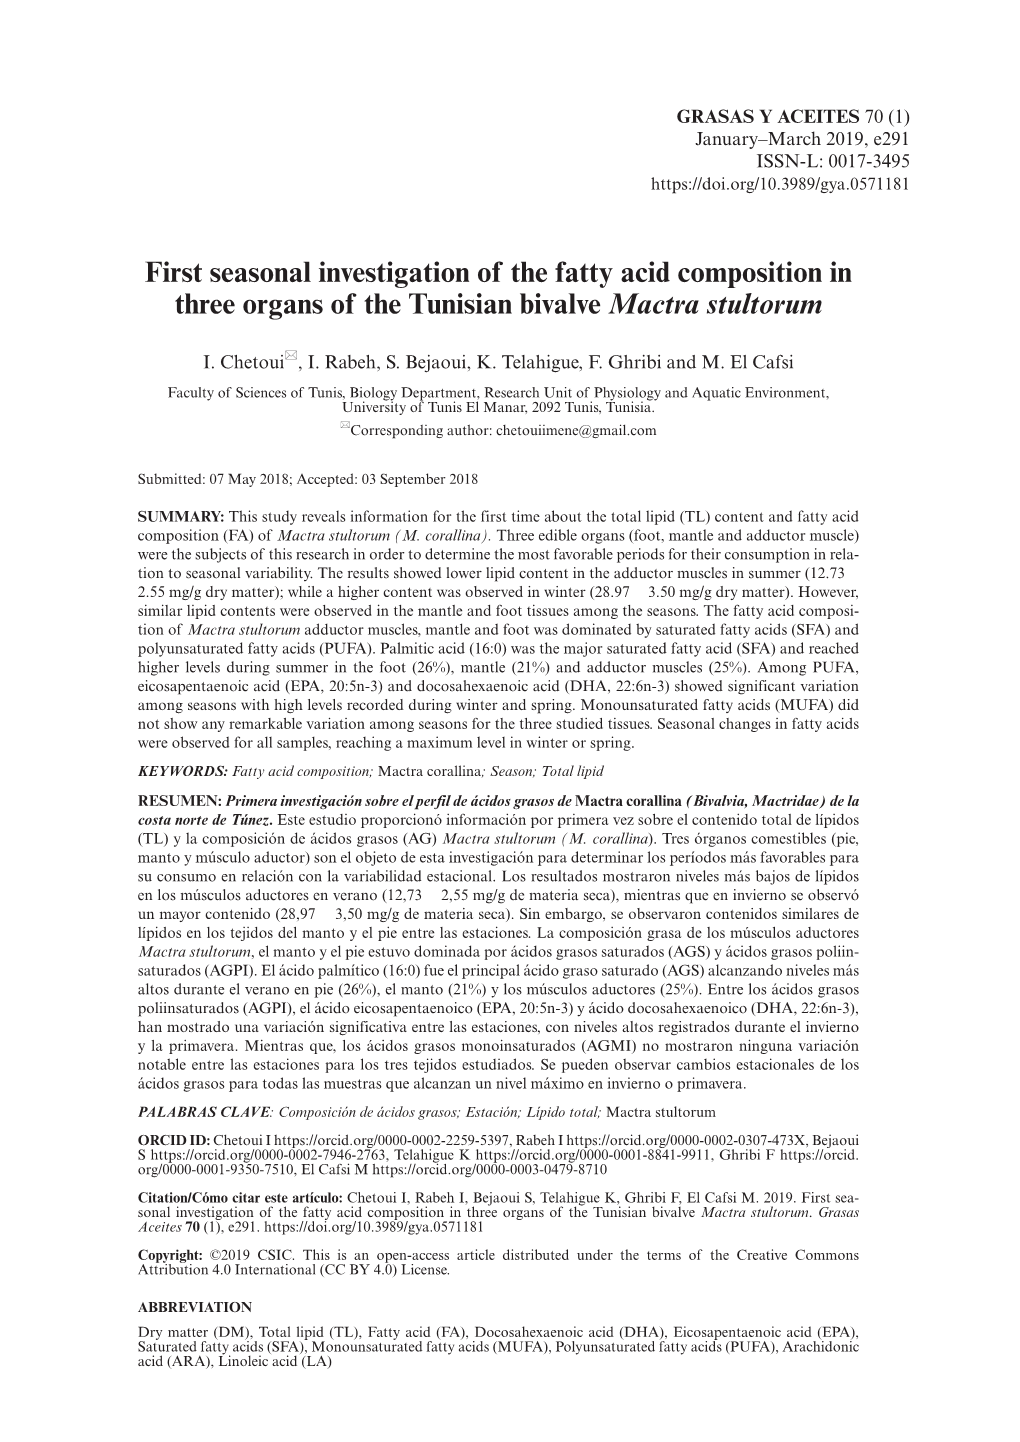 First Seasonal Investigation of the Fatty Acid Composition in Three Organs of the Tunisian Bivalve Mactra Stultorum